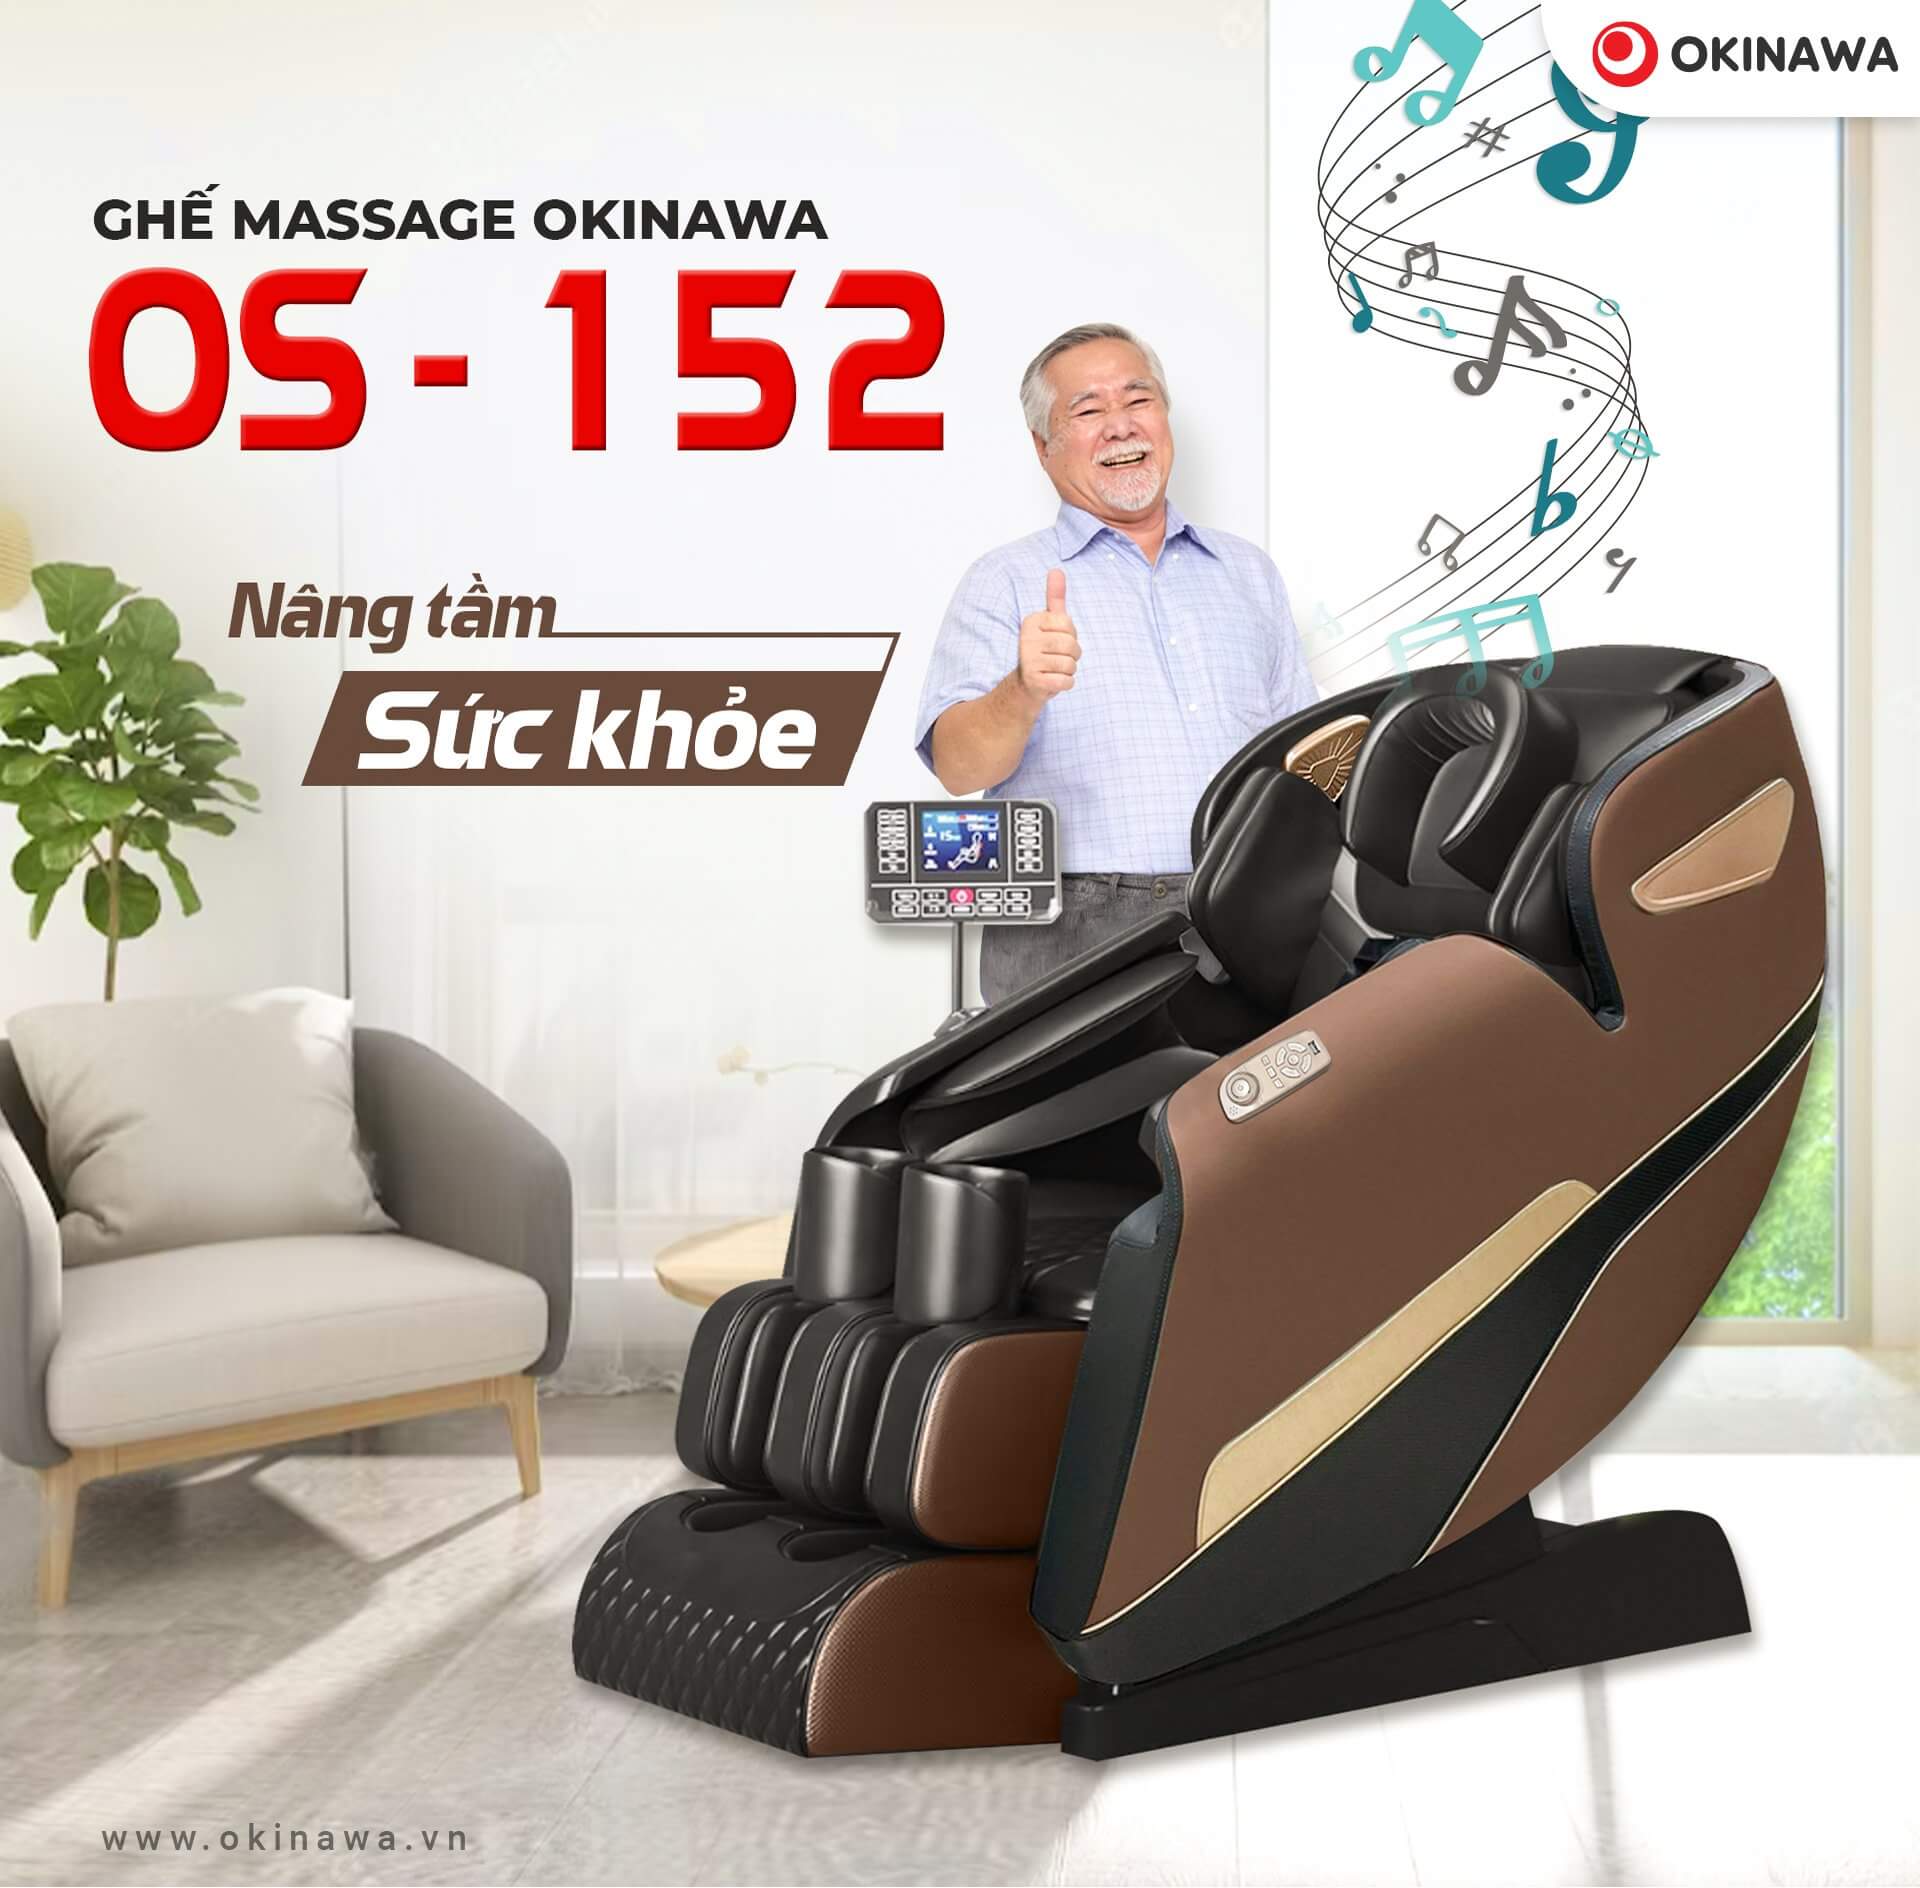 ghe-massage-okinawa-os-152